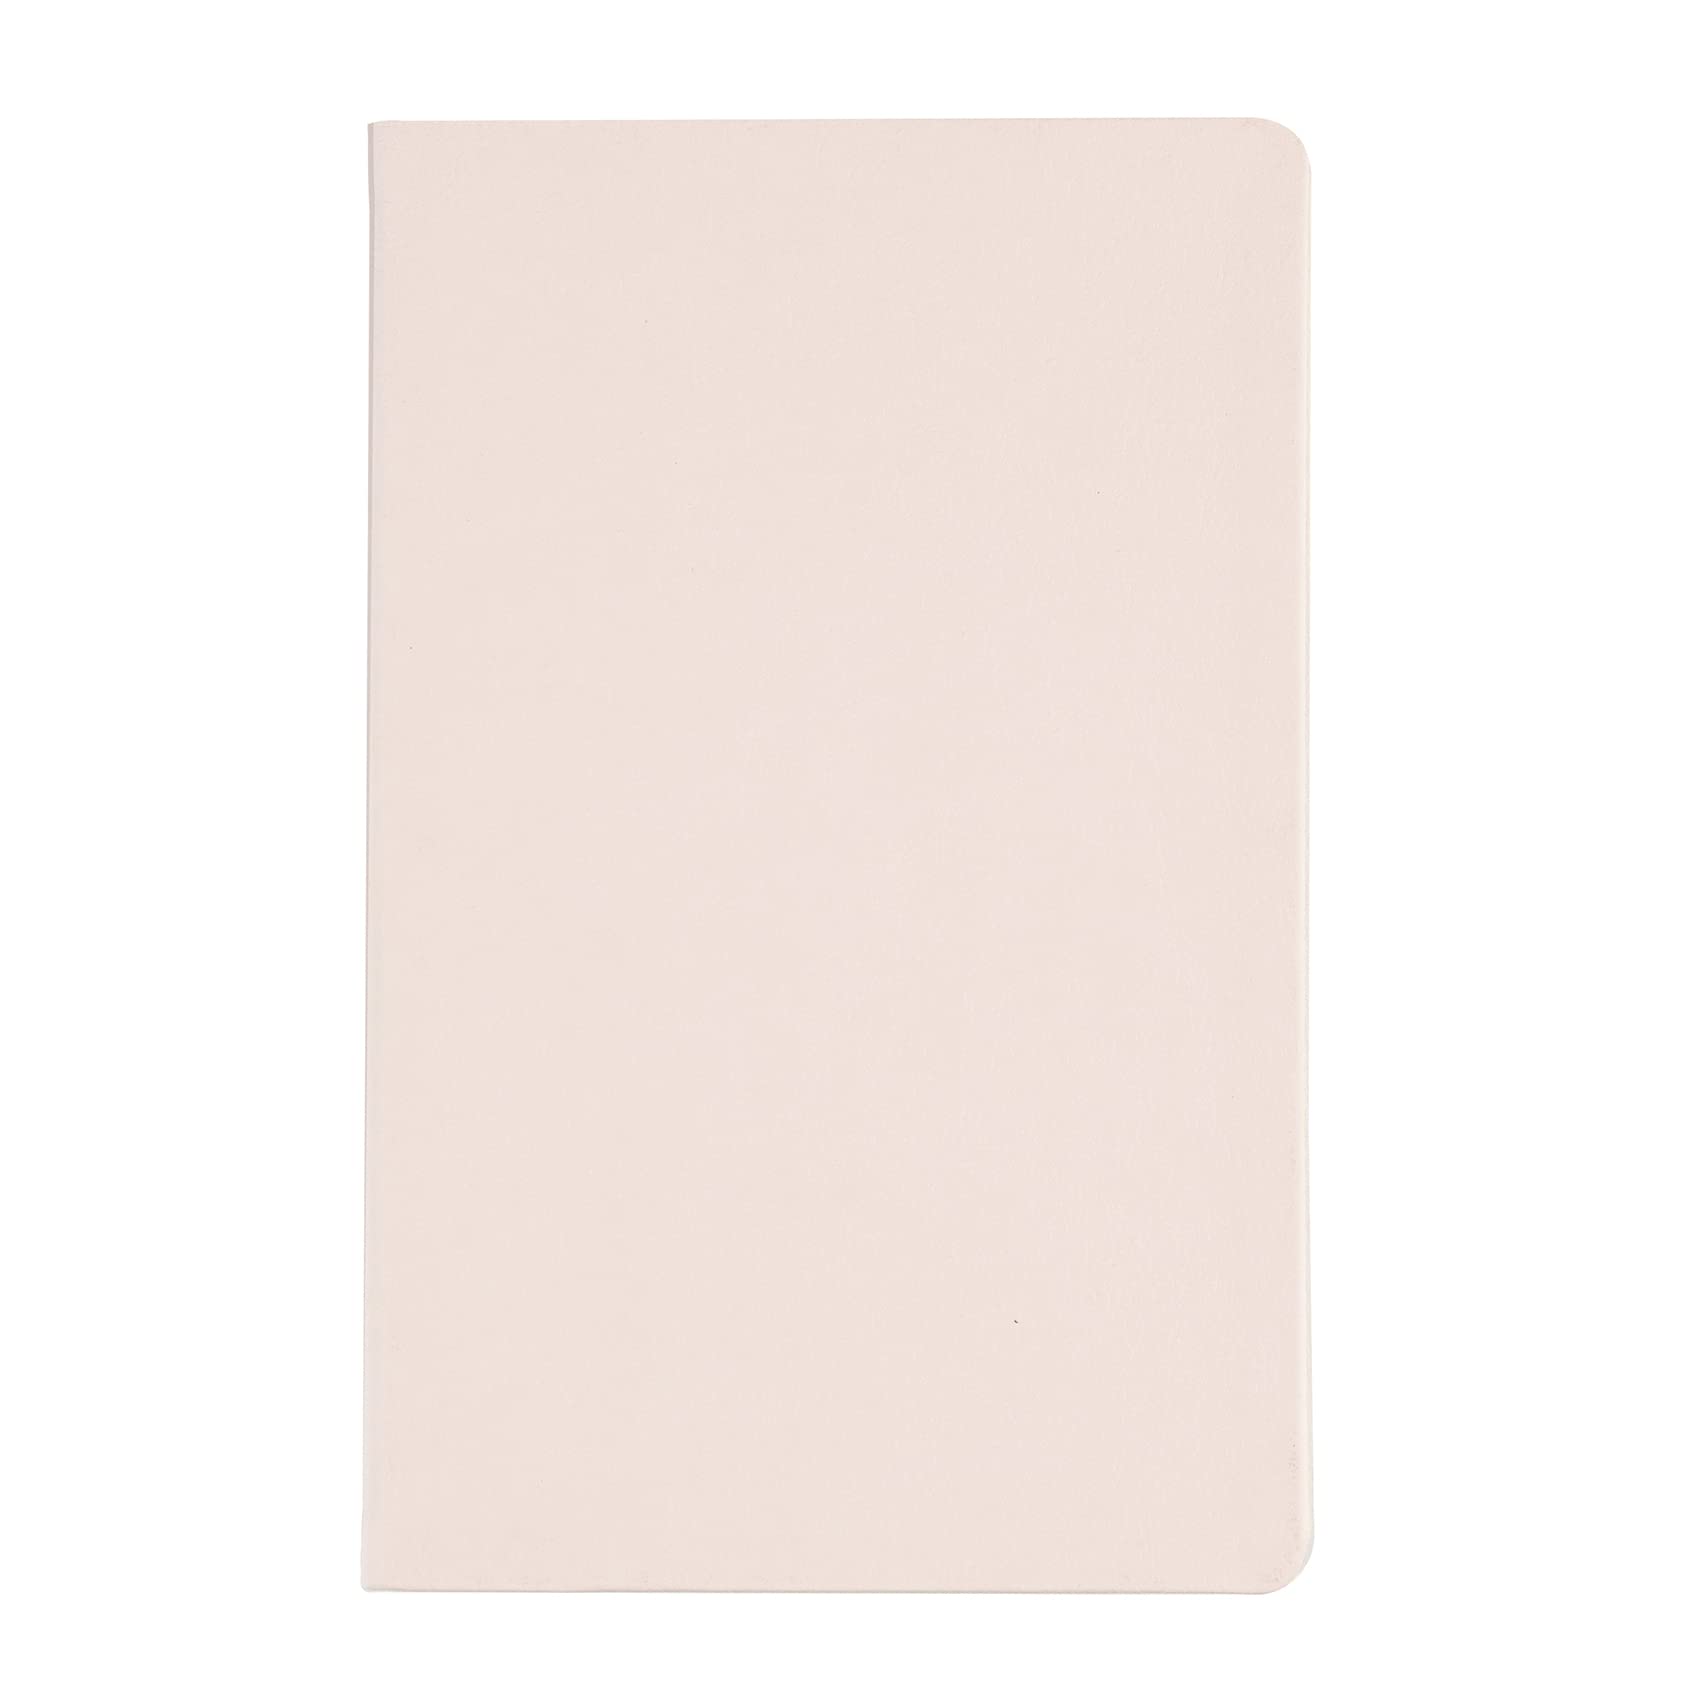 Erin Condren 5x8 Softbound Notebook - Blush, Lined